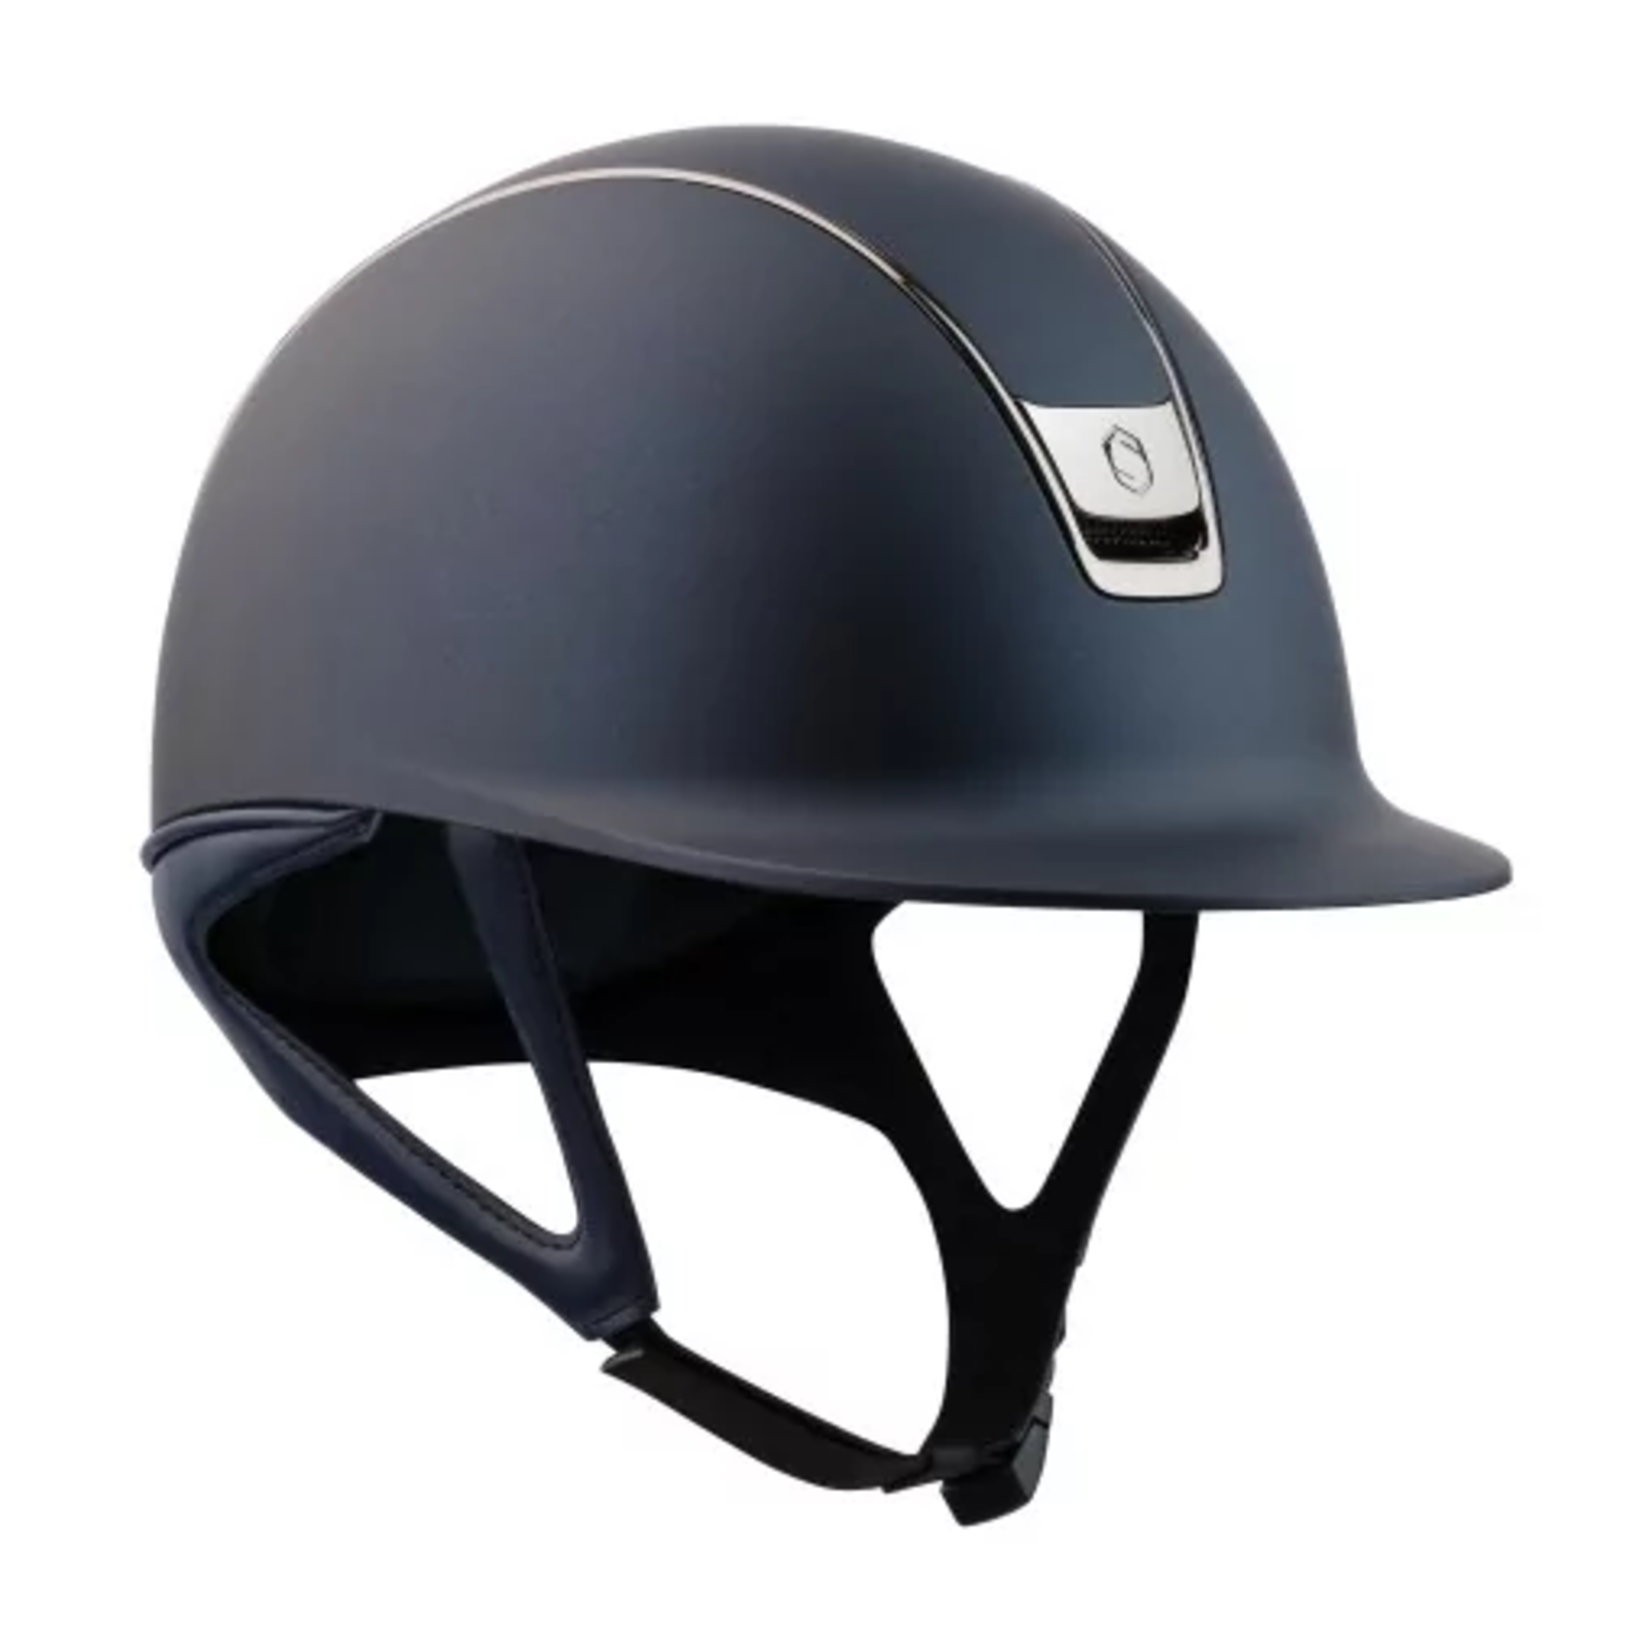 Samshield 2.0 Samshield Shadowmatt Helmet w/ Black Chrome Trim & Blazon, Sold as a kit with coordinating liner (sold separately).